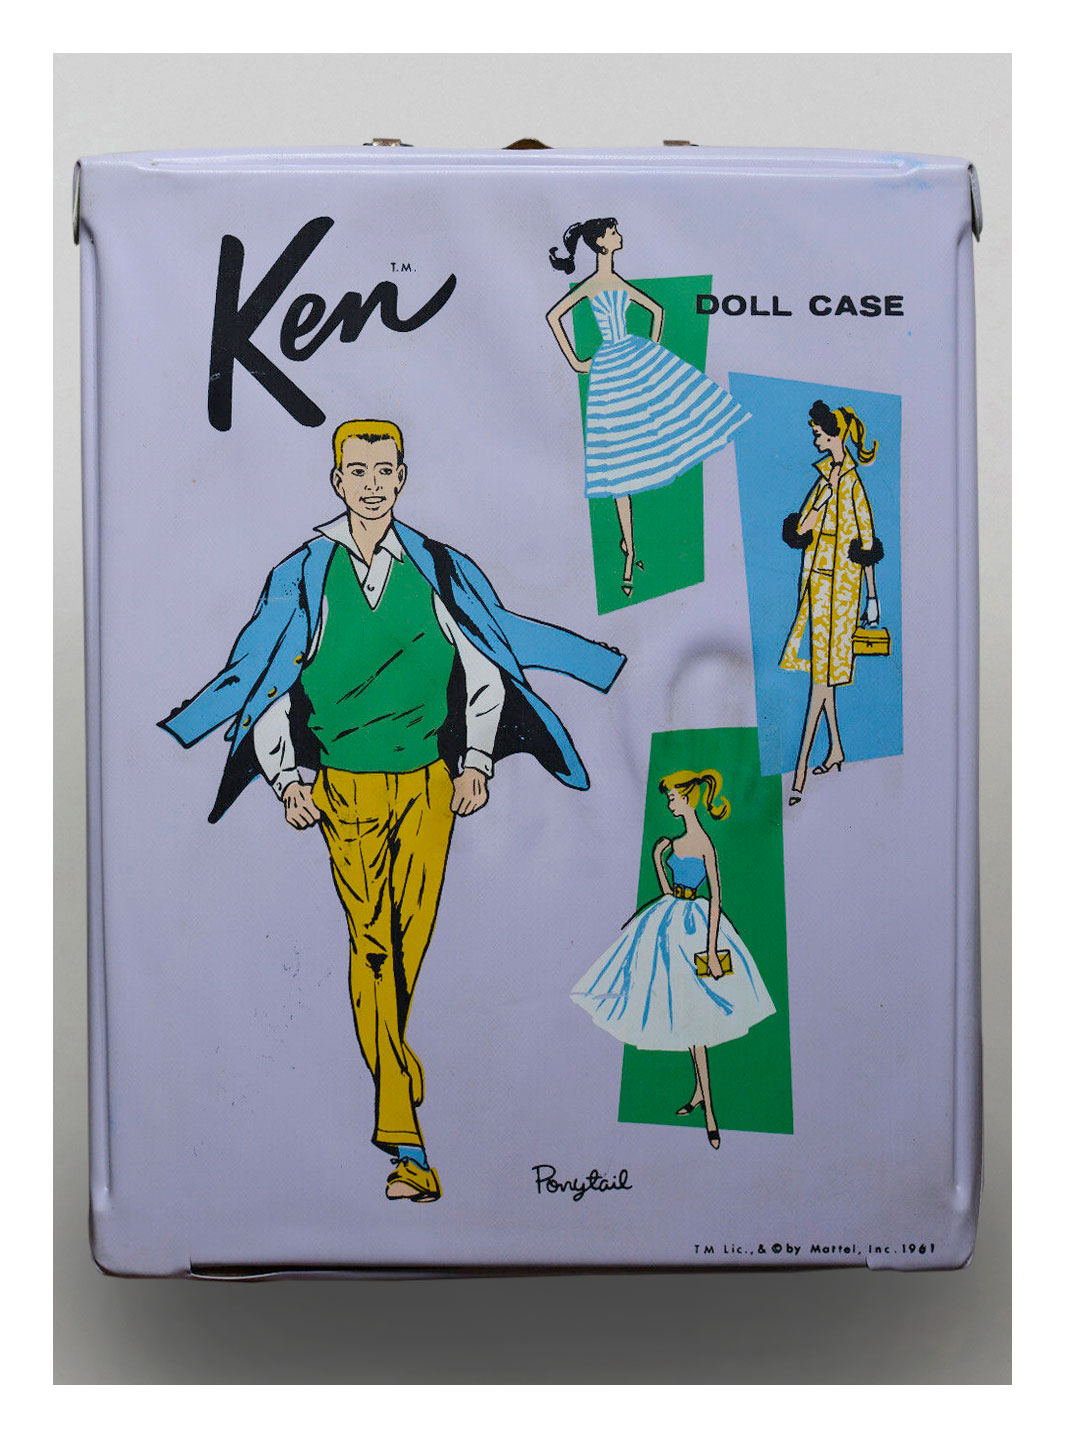 1962 #395 Ken Doll Case by SPP (lavender)